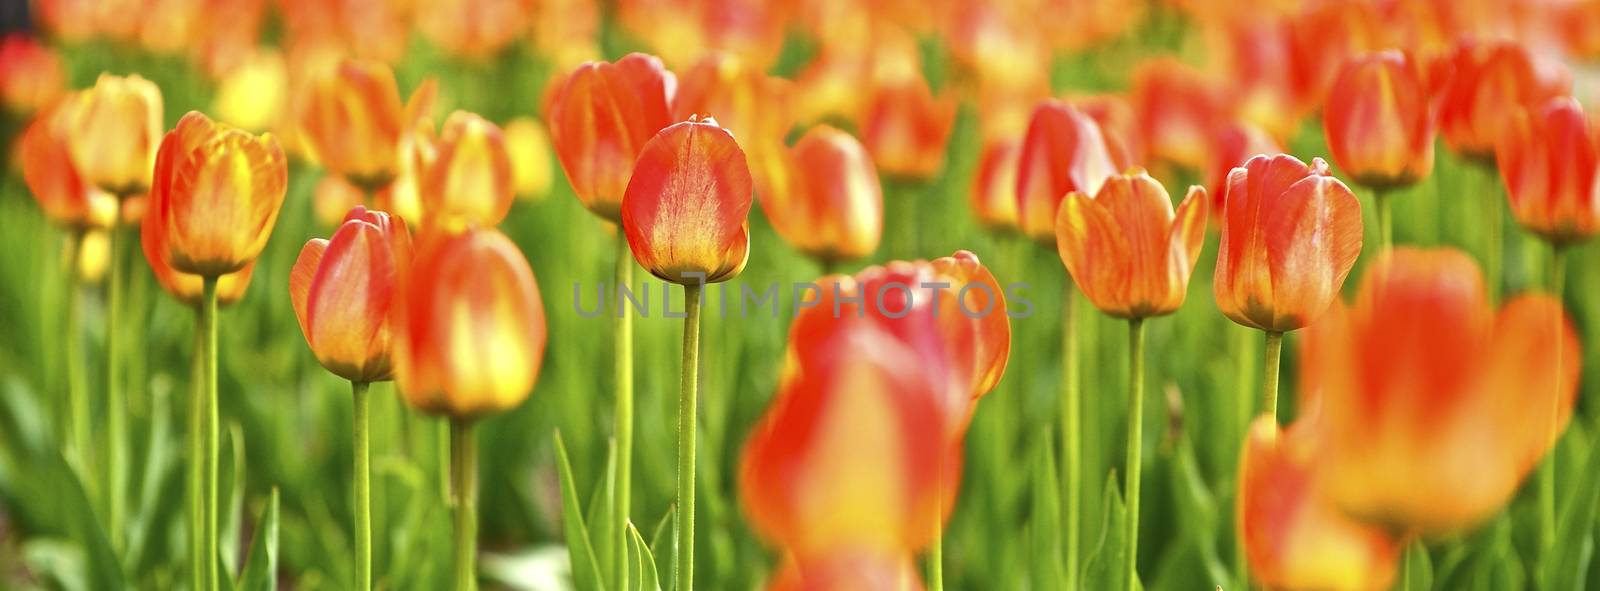 Tulips Panoramic by welcomia